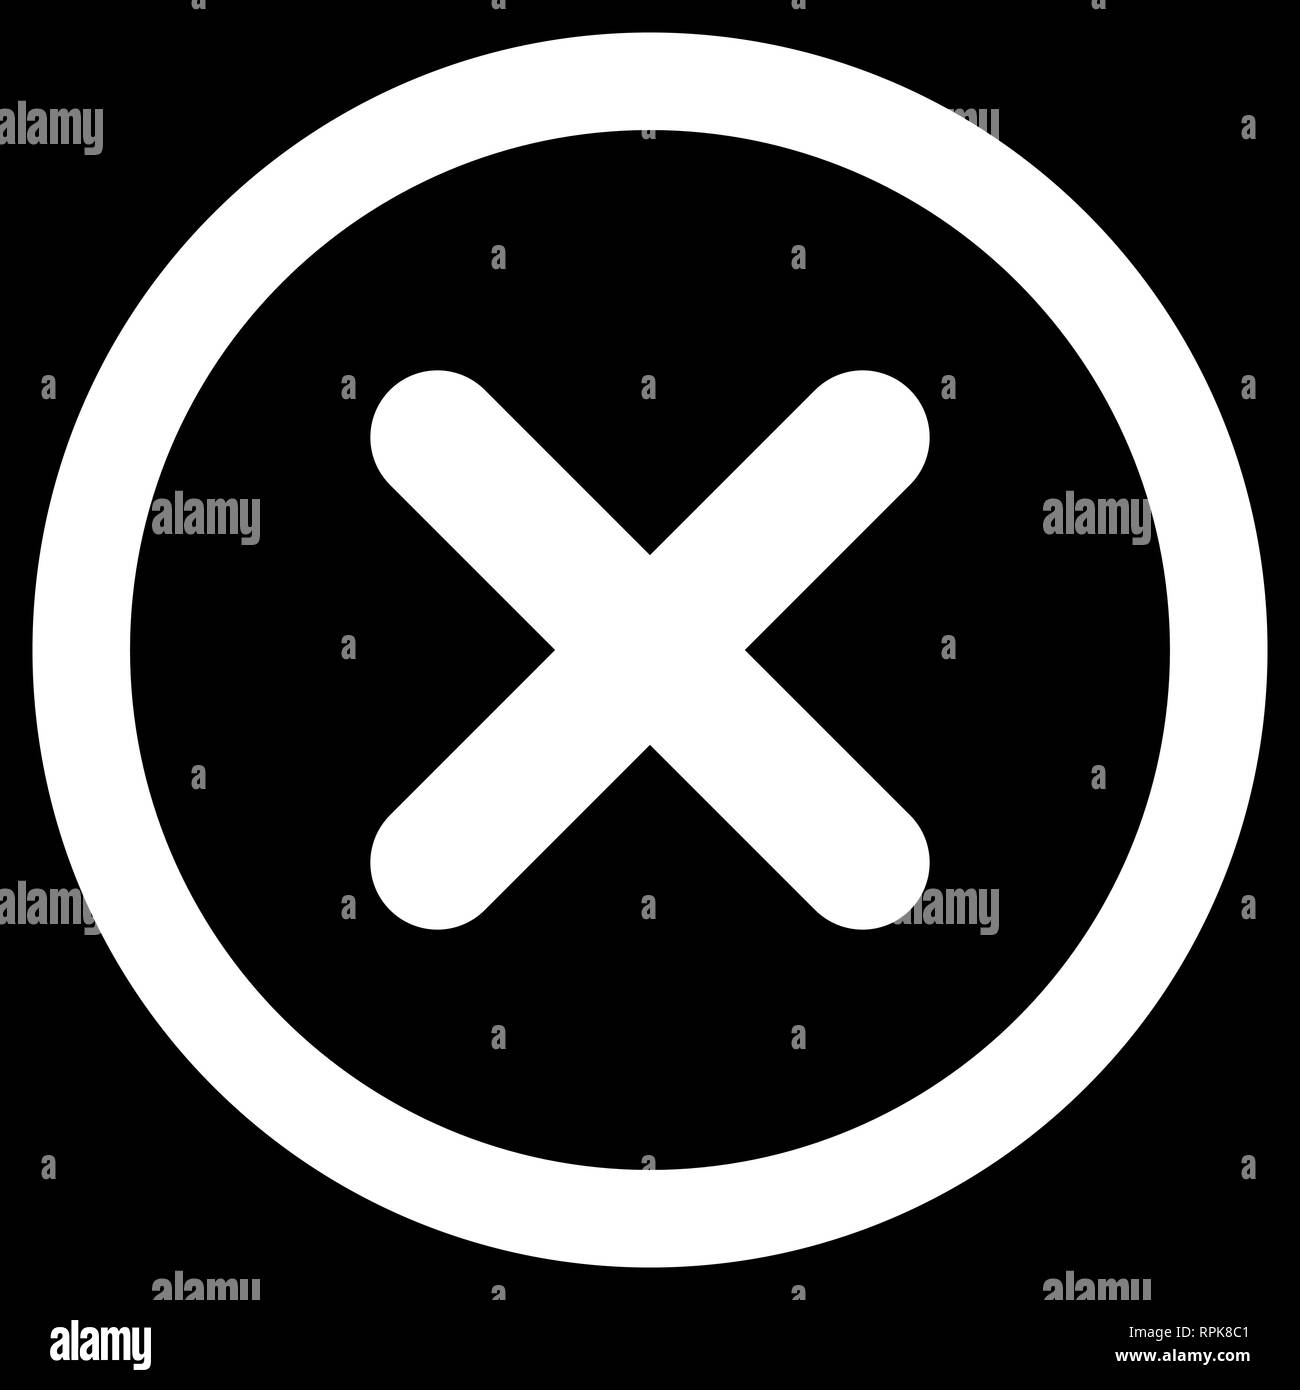 Häkchen - weißes Kreuz Symbol innerhalb des Kreises - Vector Illustration Stock Vektor